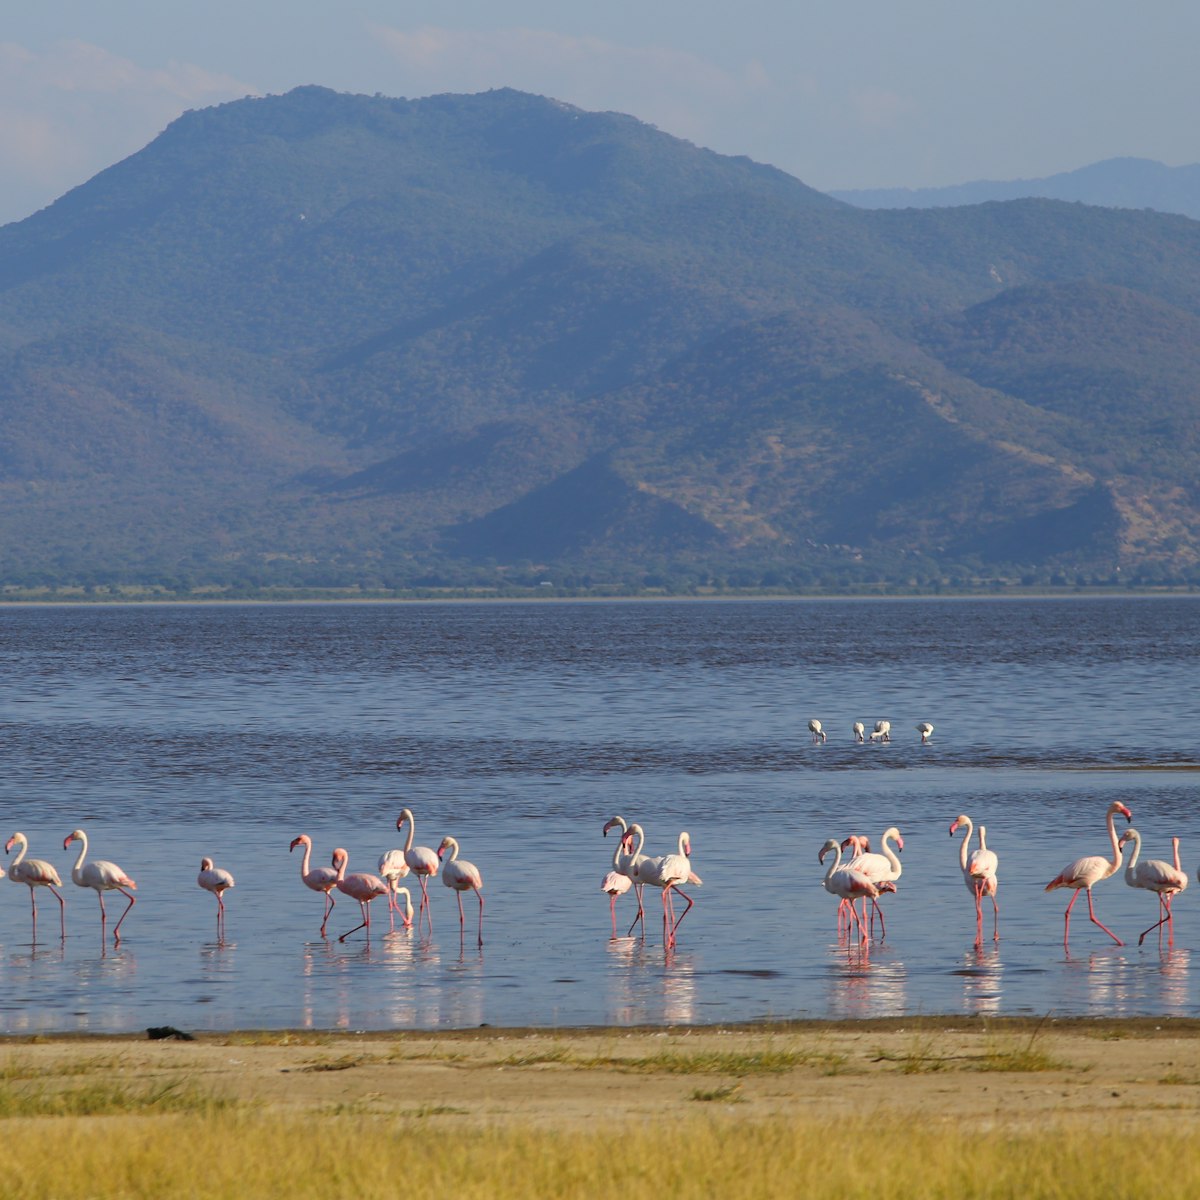 A group of flamingos wading in Lake Manyara in Tanzania.